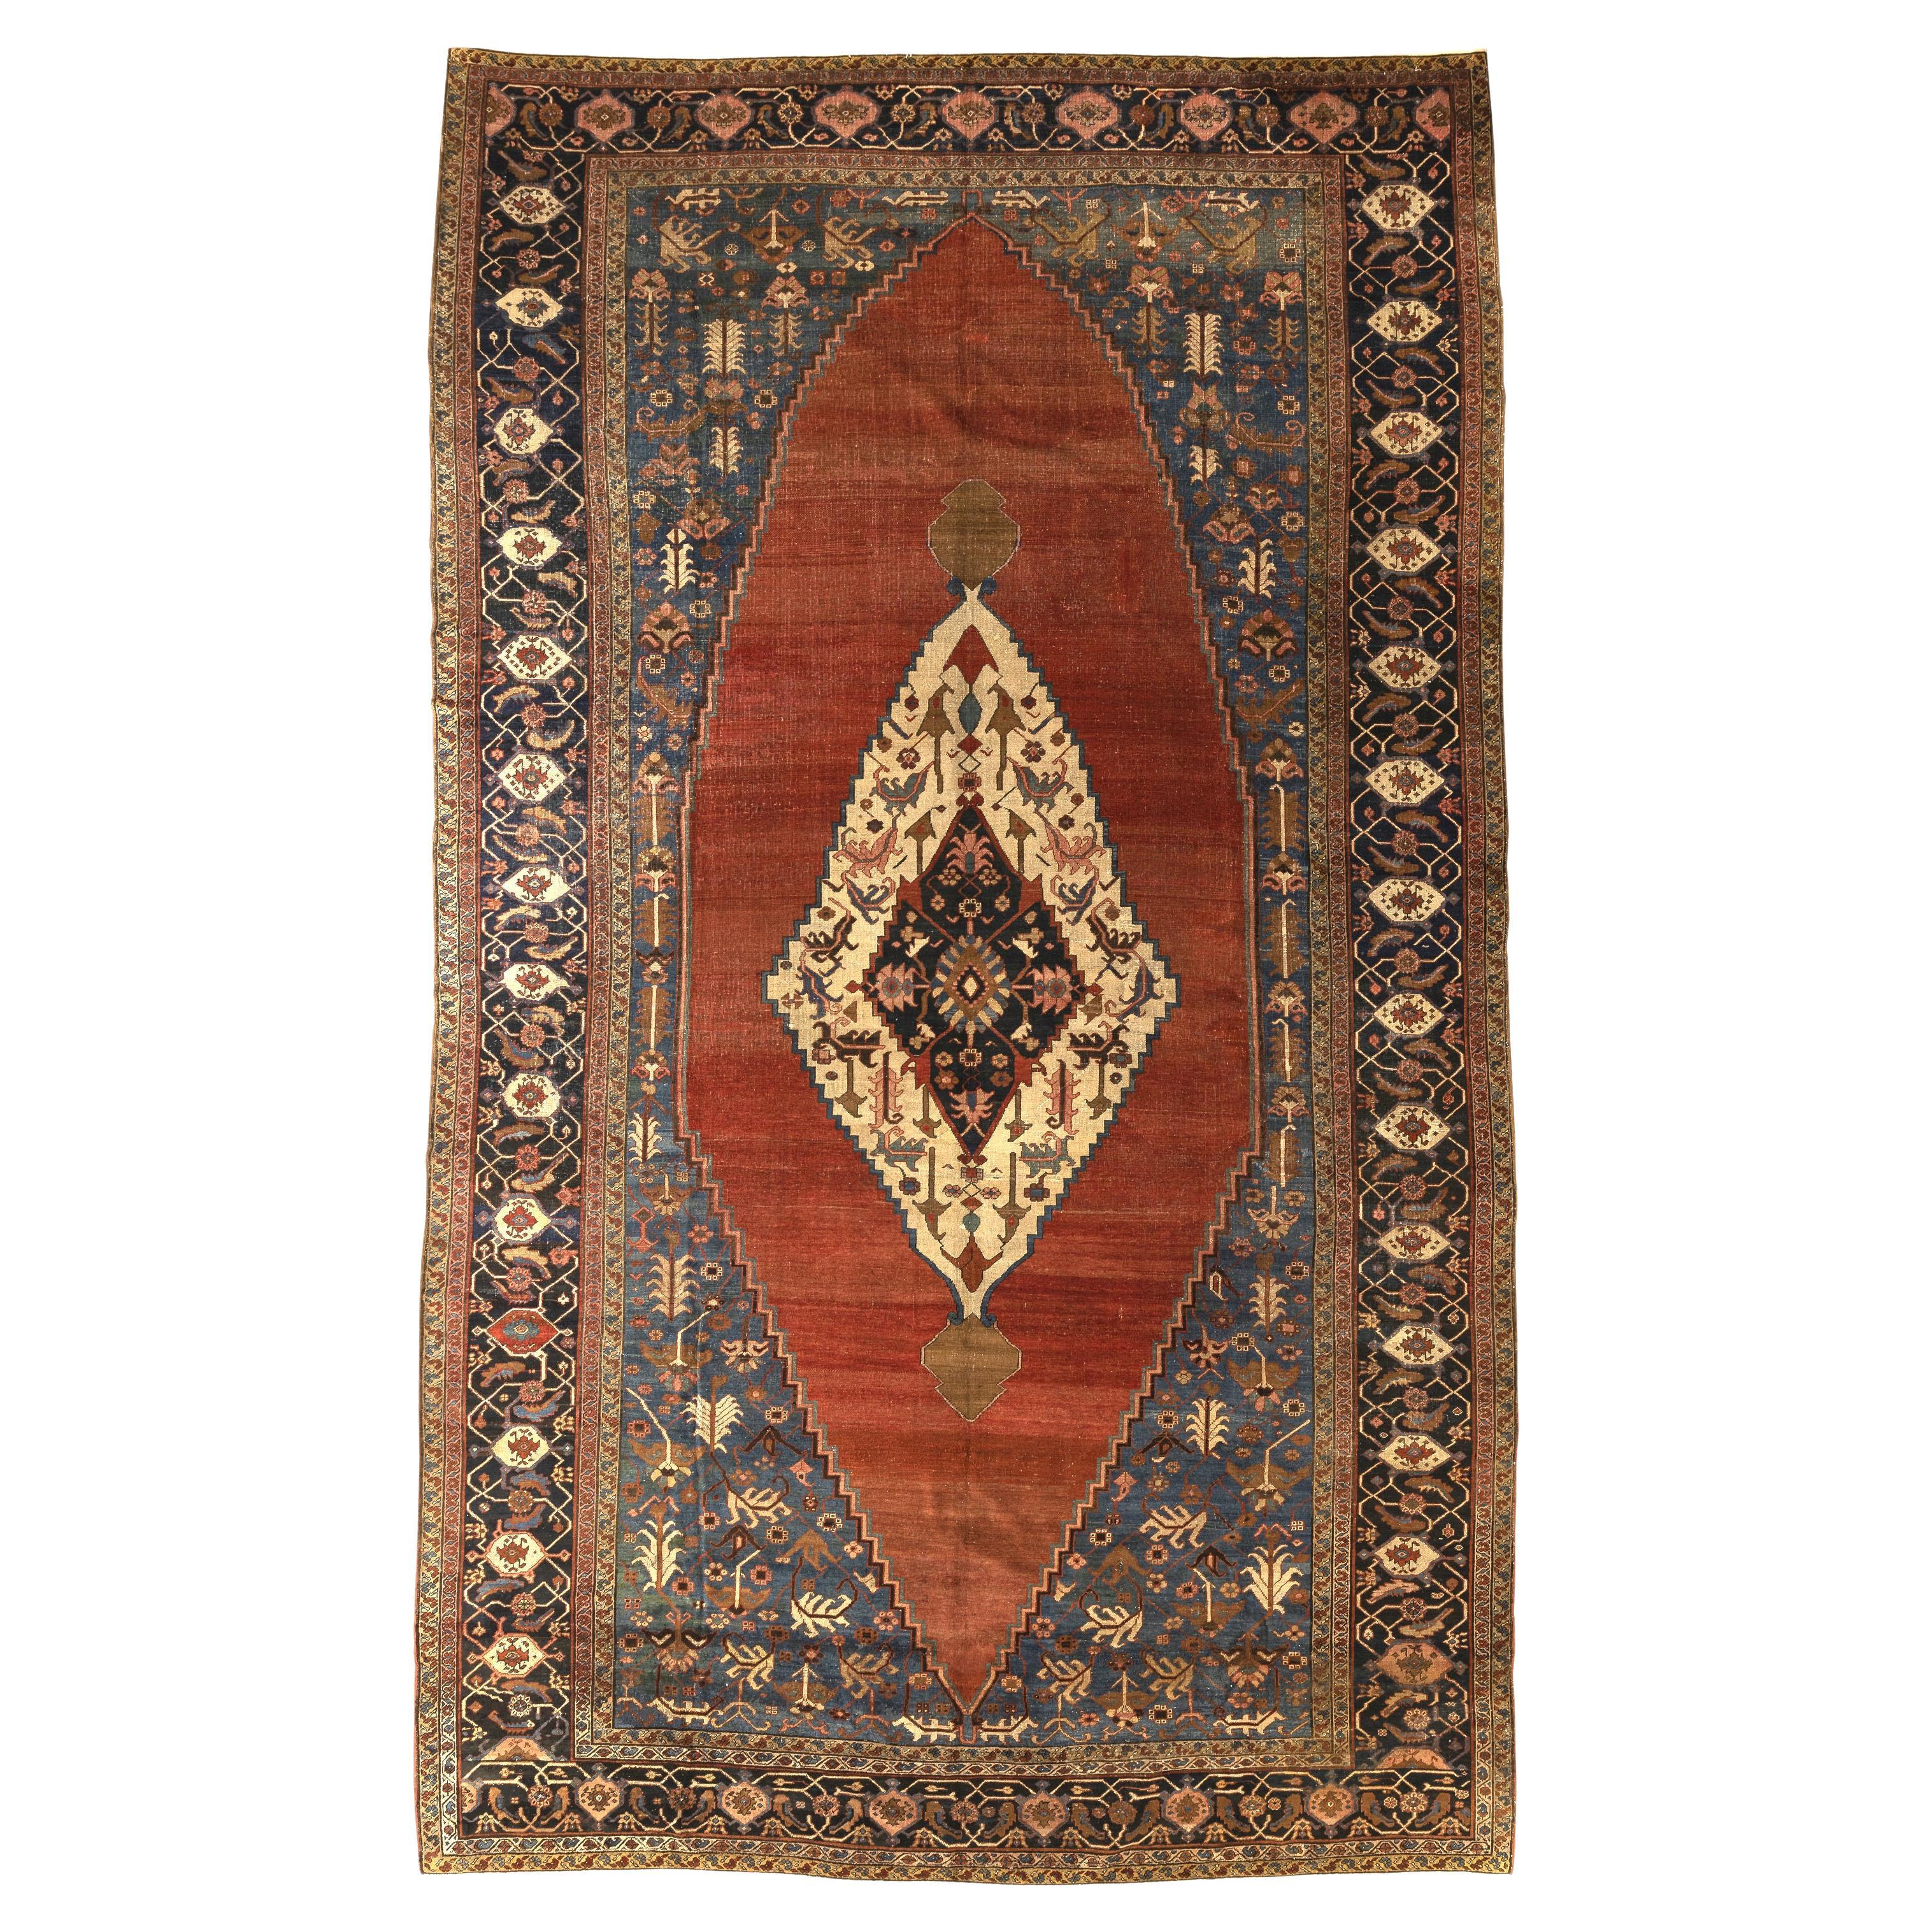 19th Century Antique Persian Serapi Palatial Size Carpet